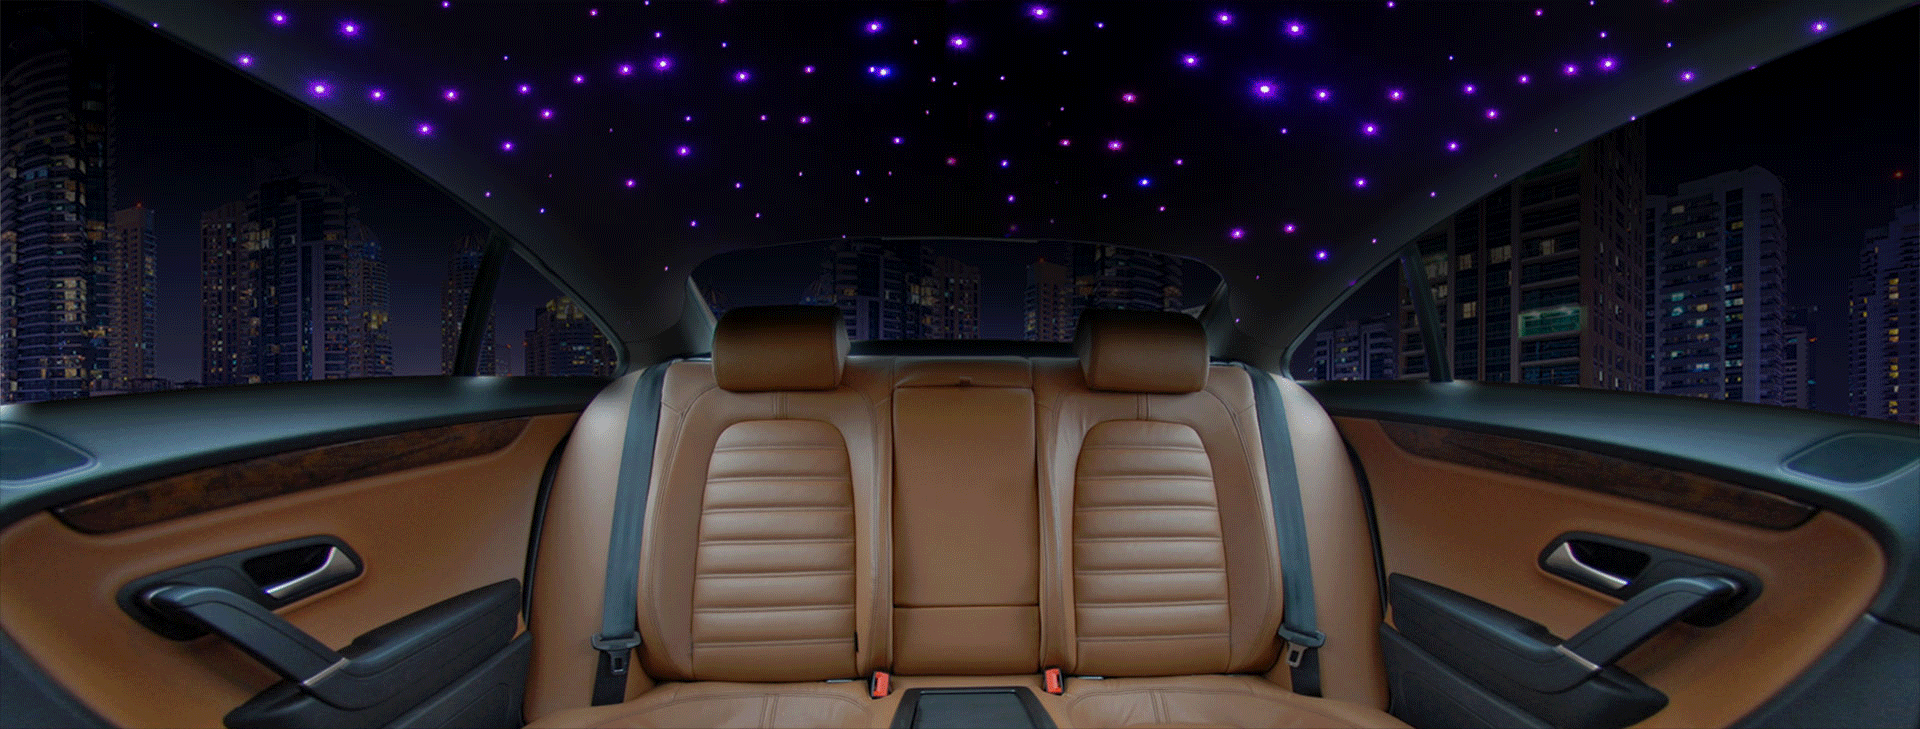 starlight headliner service UAE